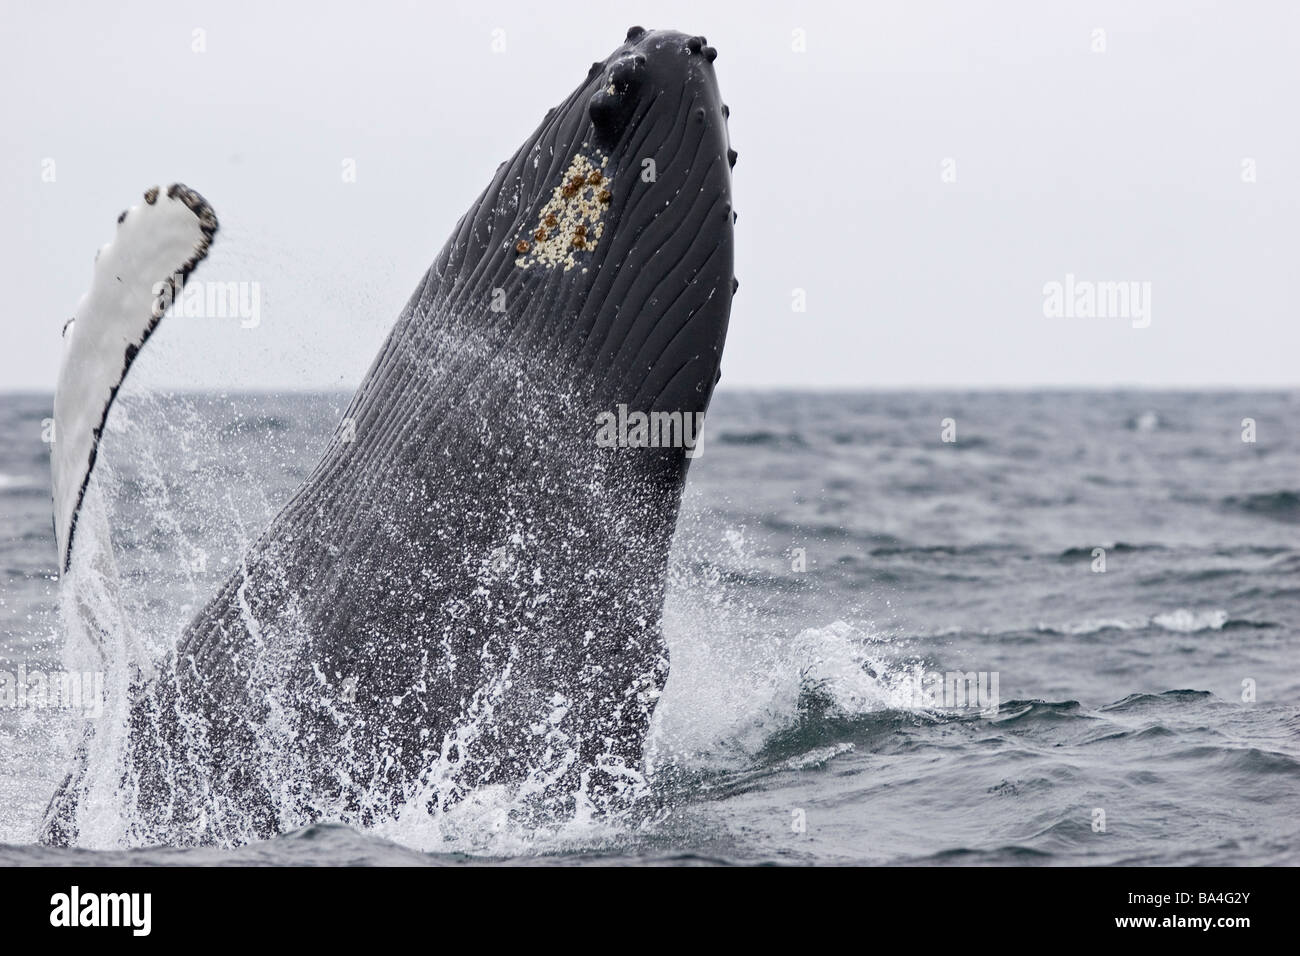 Humpback whale breaching in North Atlantic Stock Photo